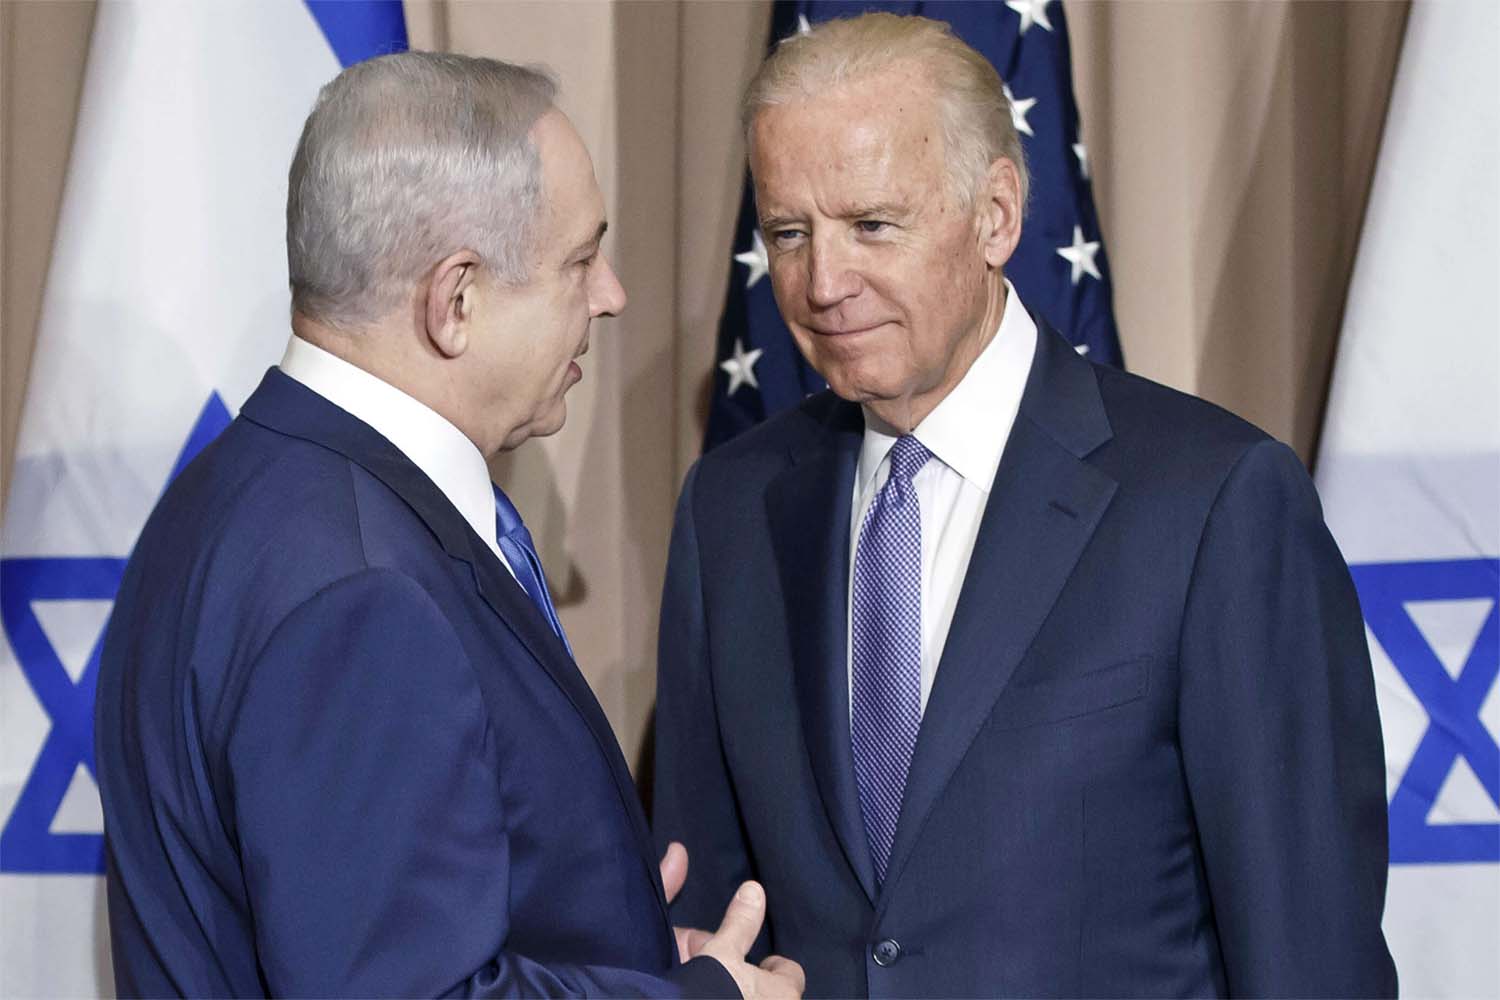 Biden with Netanyahu